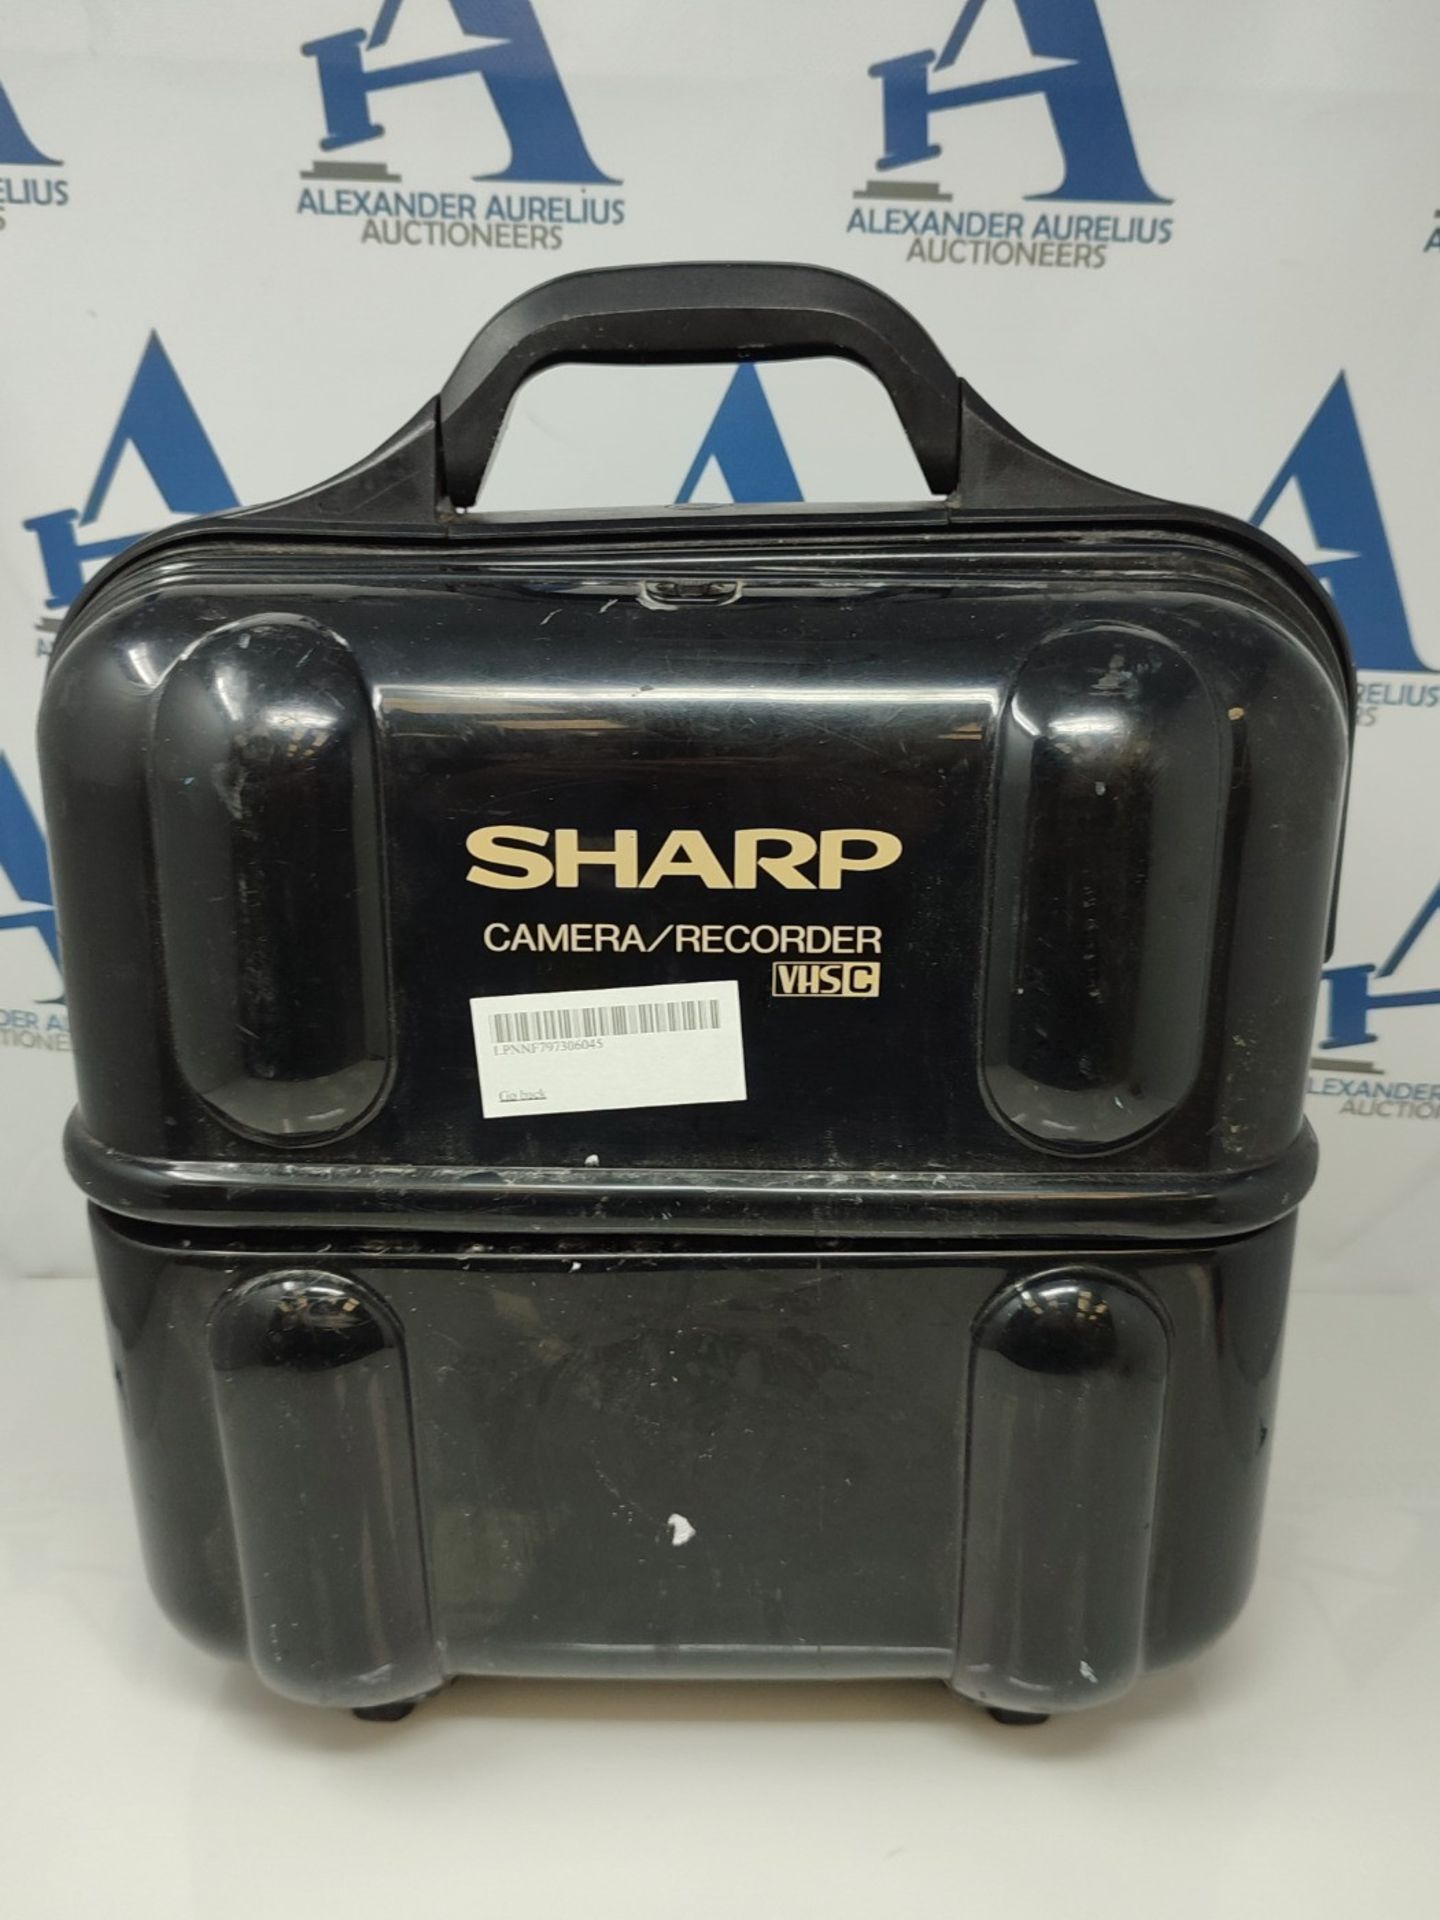 SHARP camera recorder model no. VC-C50H - Image 3 of 3